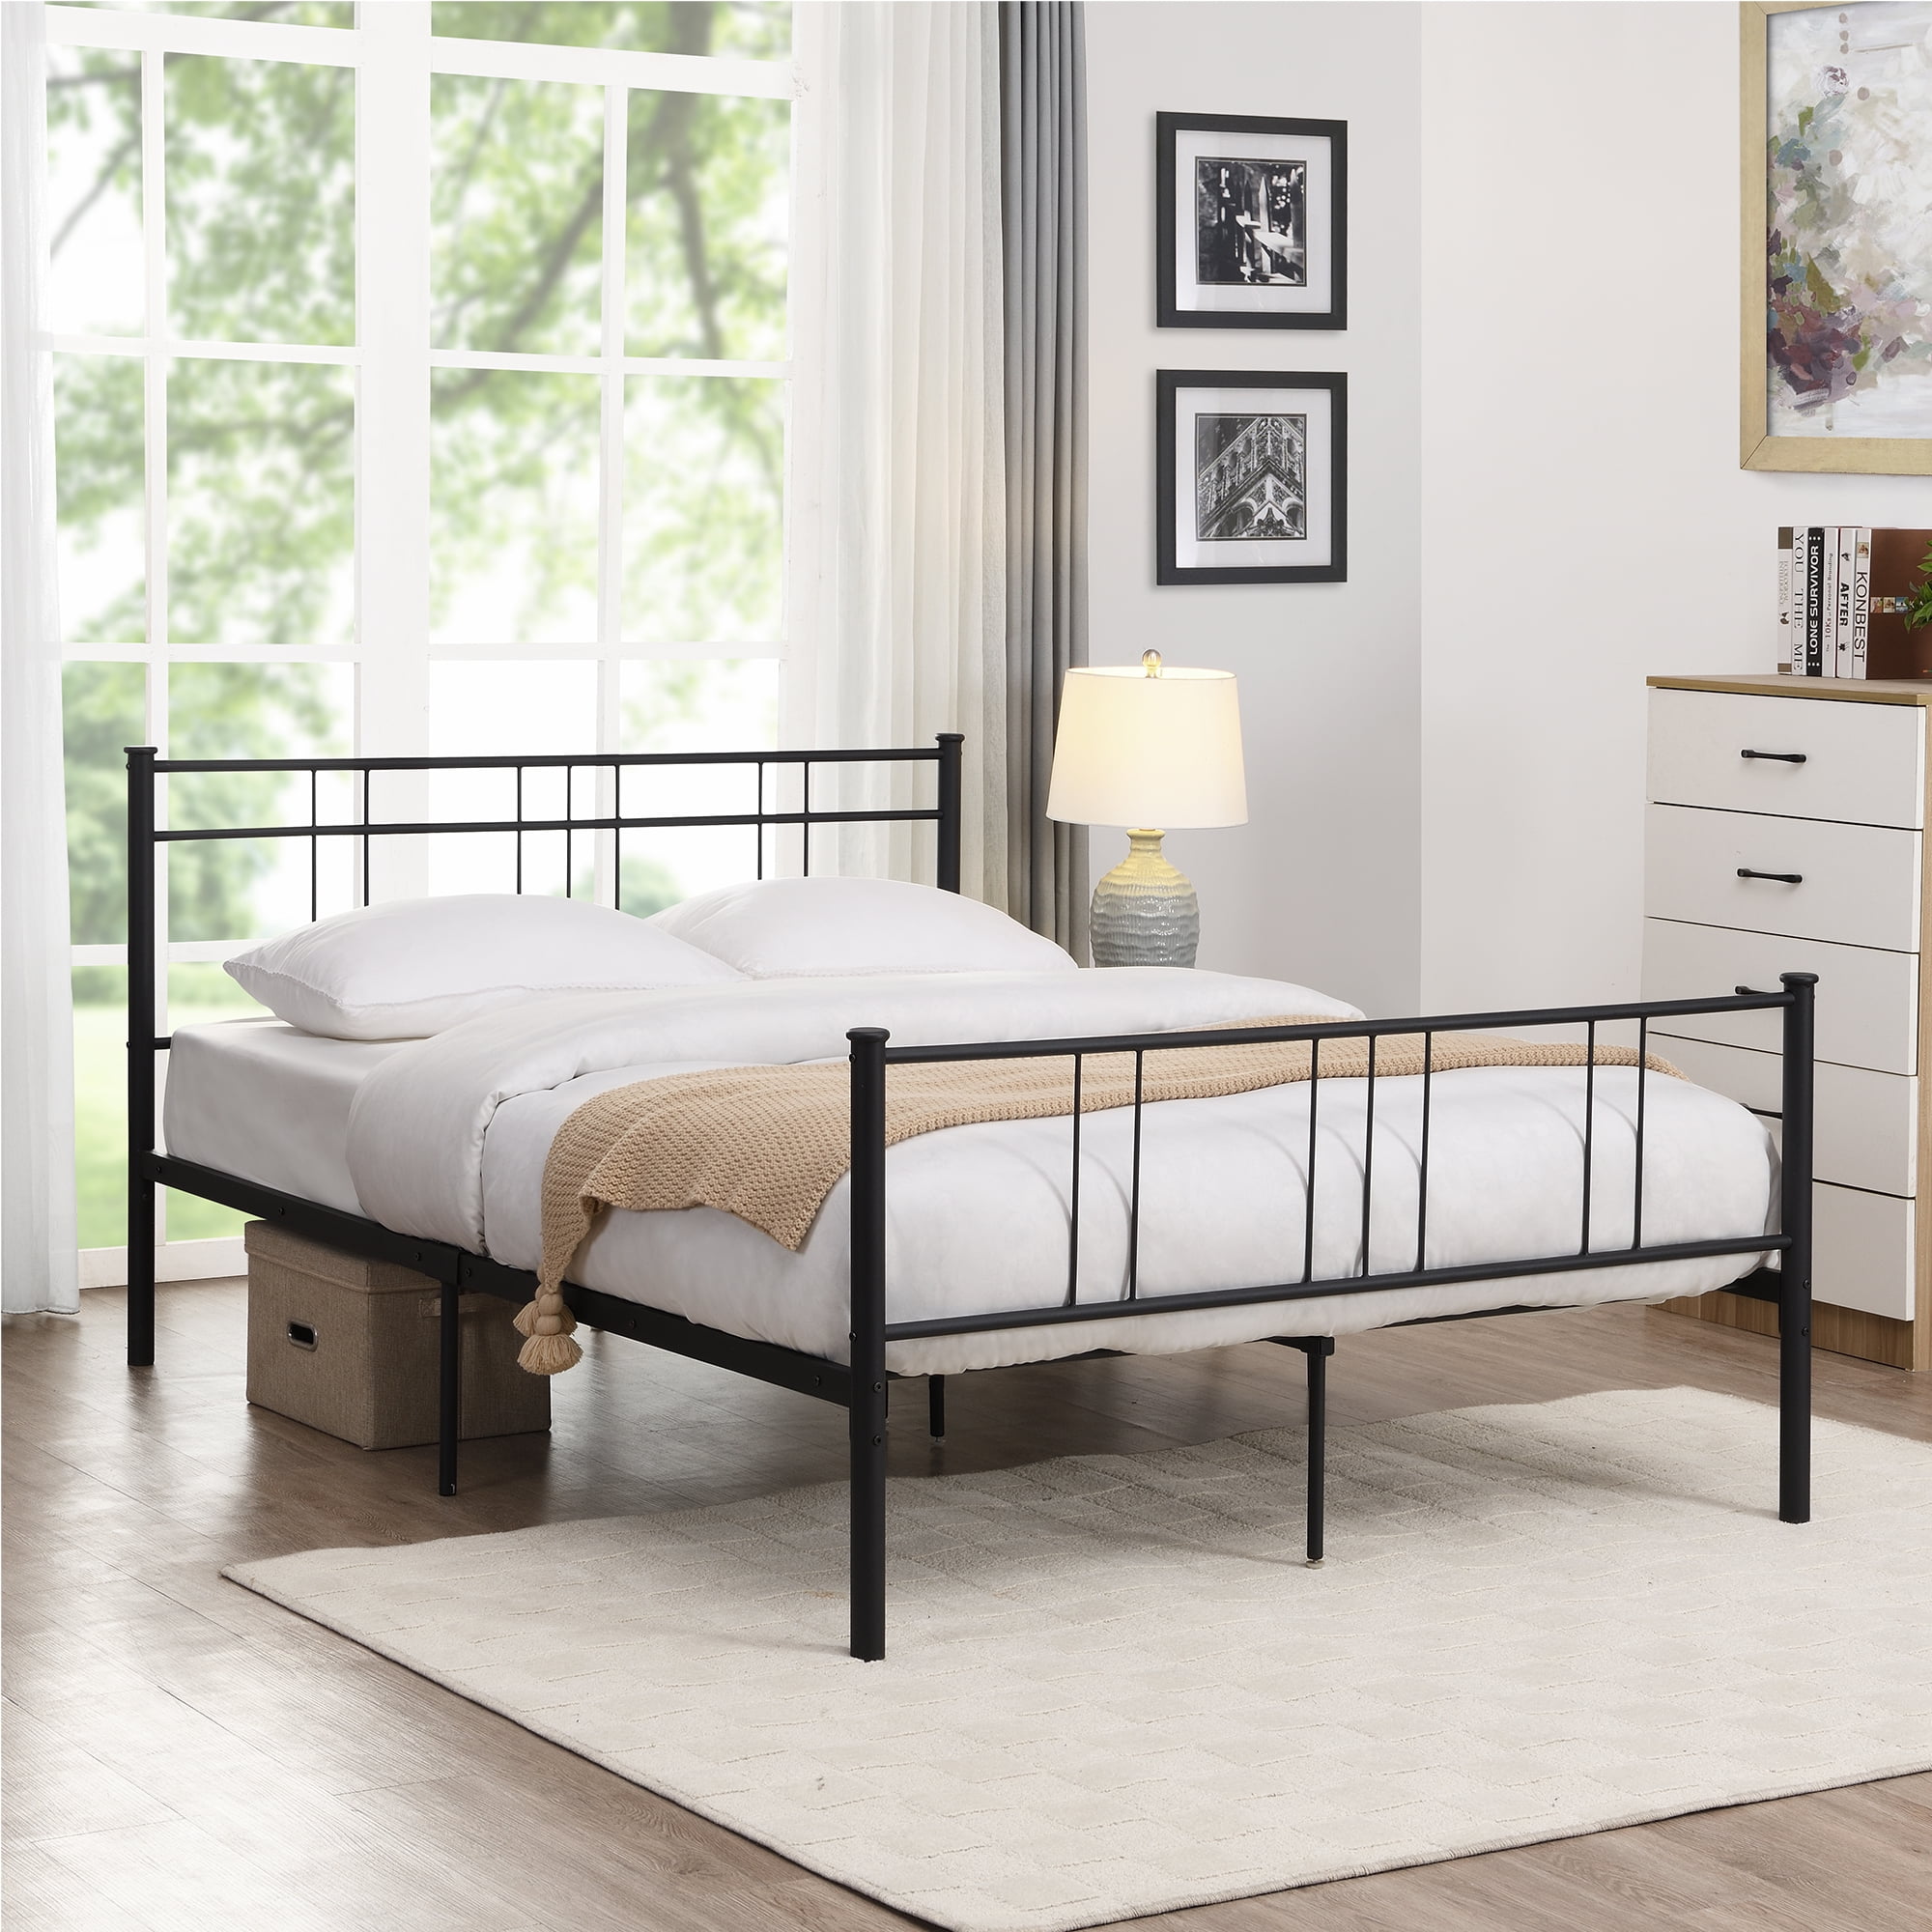 Full Metal Bed Frame 12 6 Inch Double, Non Slip Bed Frame Feet